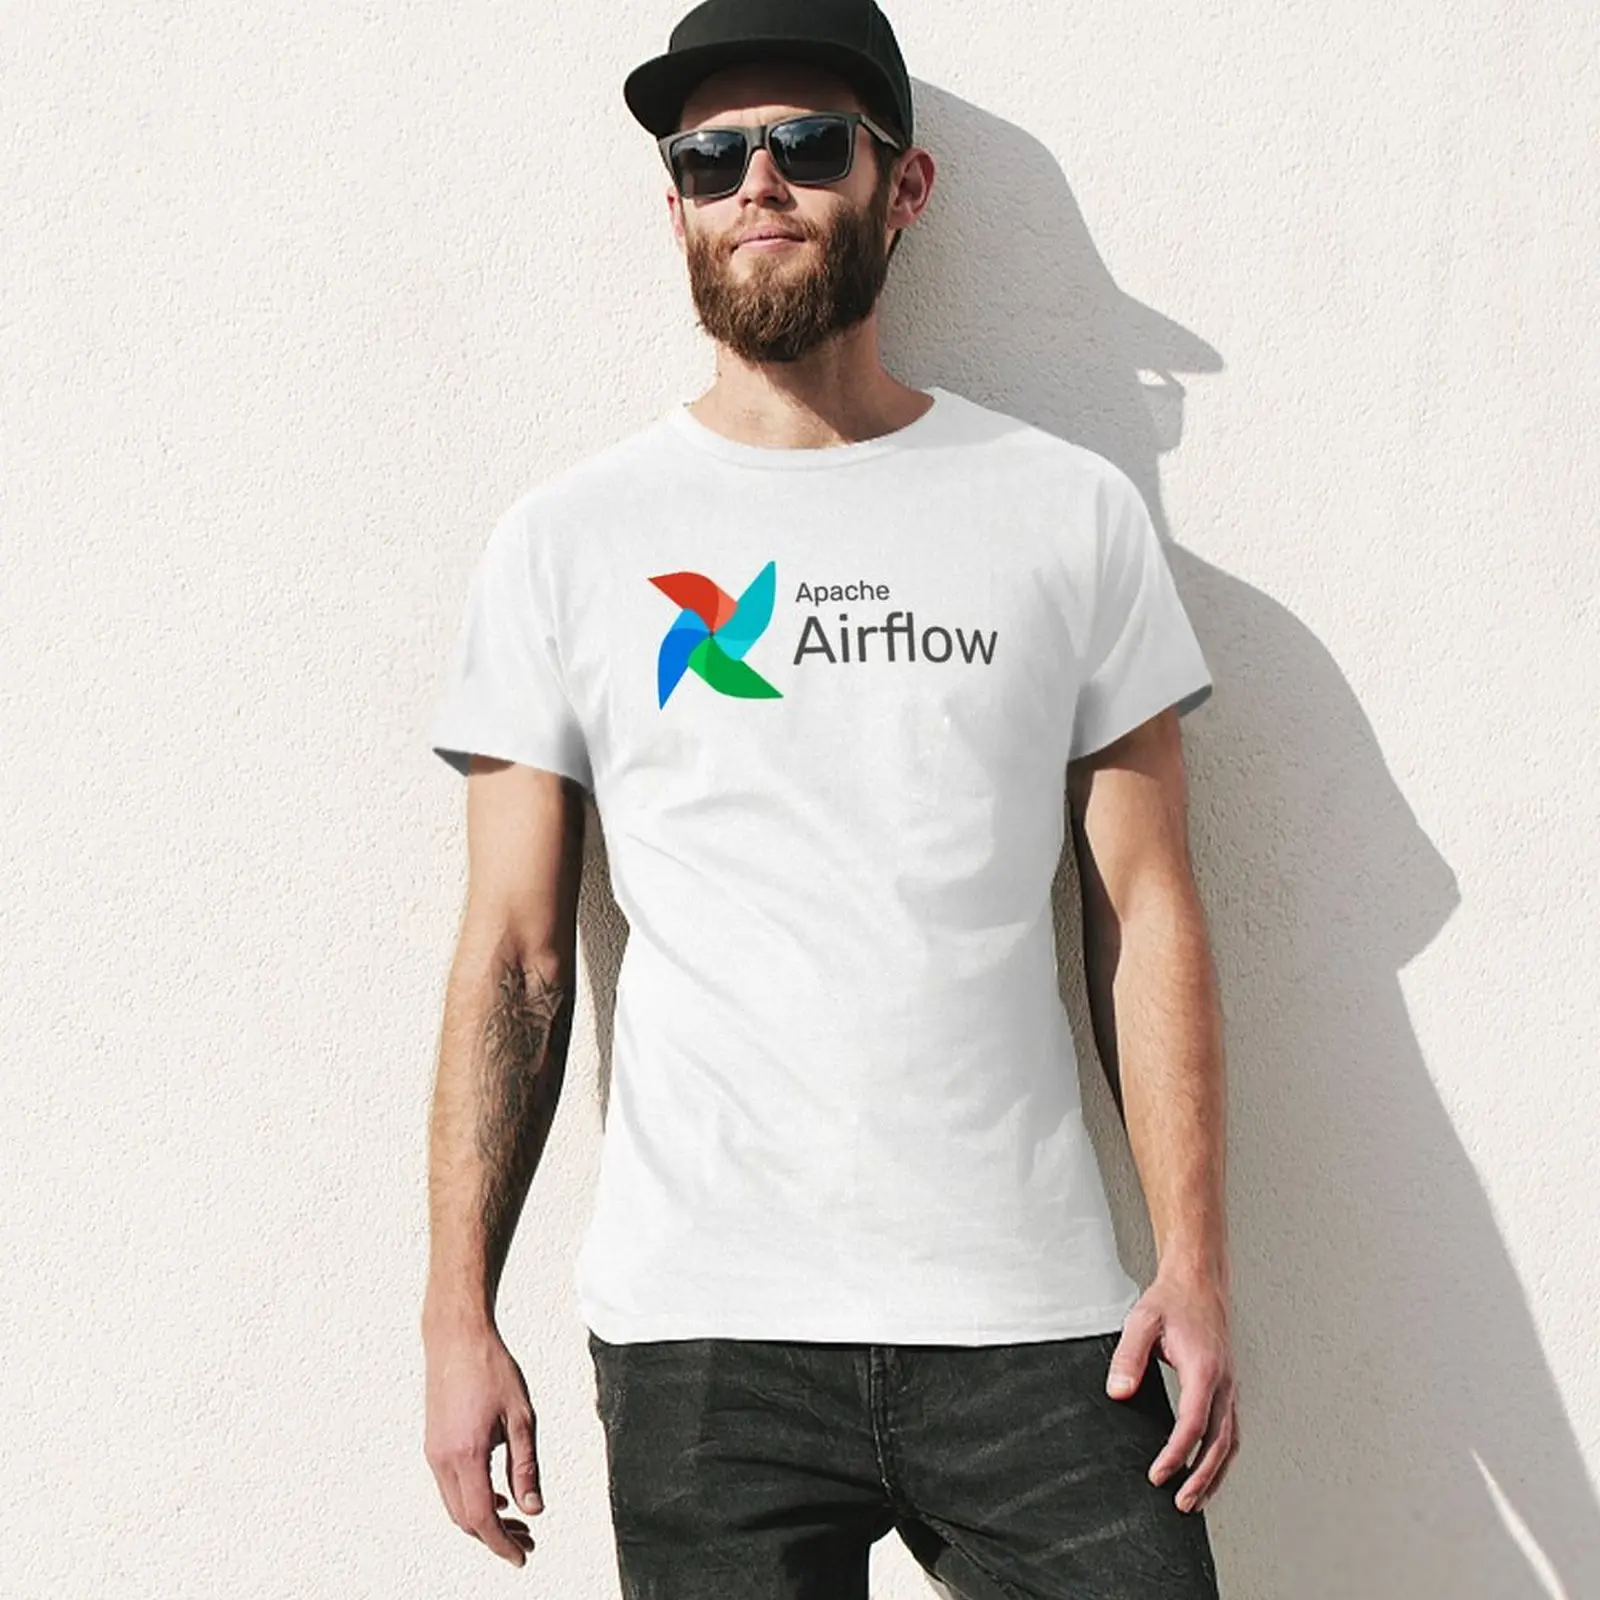 Apache Airflow t-shirt plain hippie clothes magliette da uomo casual elegante